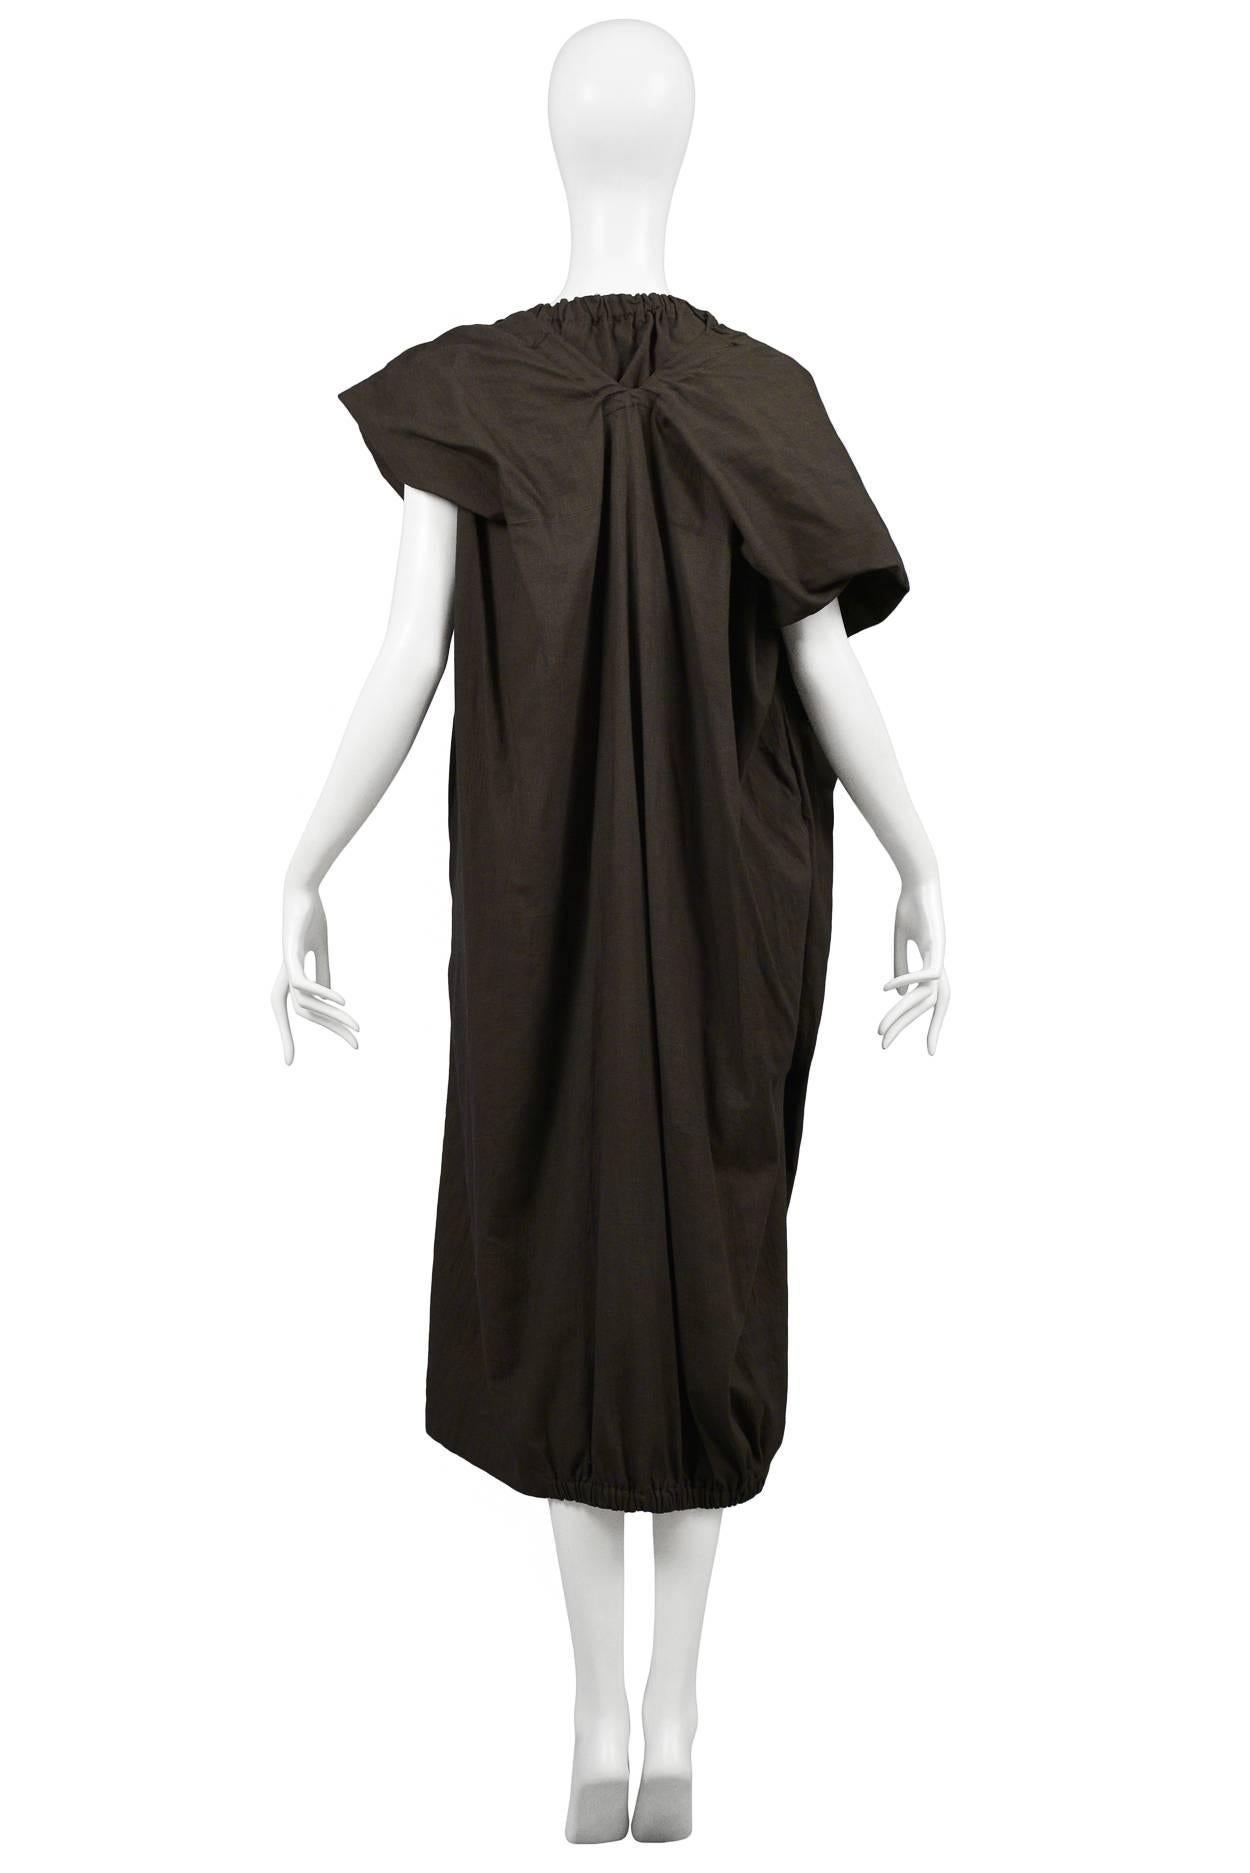 Women's Comme des Garcons Iconic Layer Dress 1984